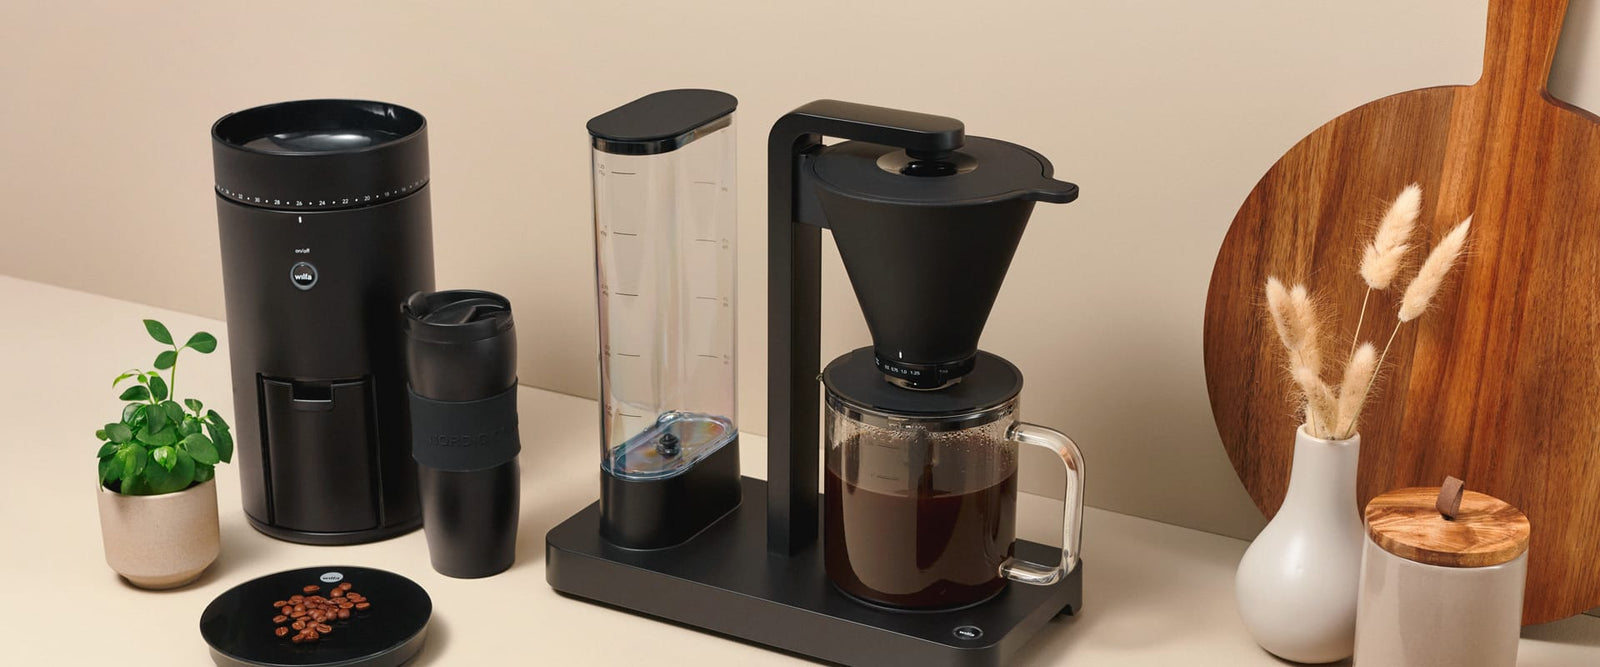 Wilfa Performance Compact Coffee Maker and Uniform+ Coffee Grinder Bun —  Best Coffee